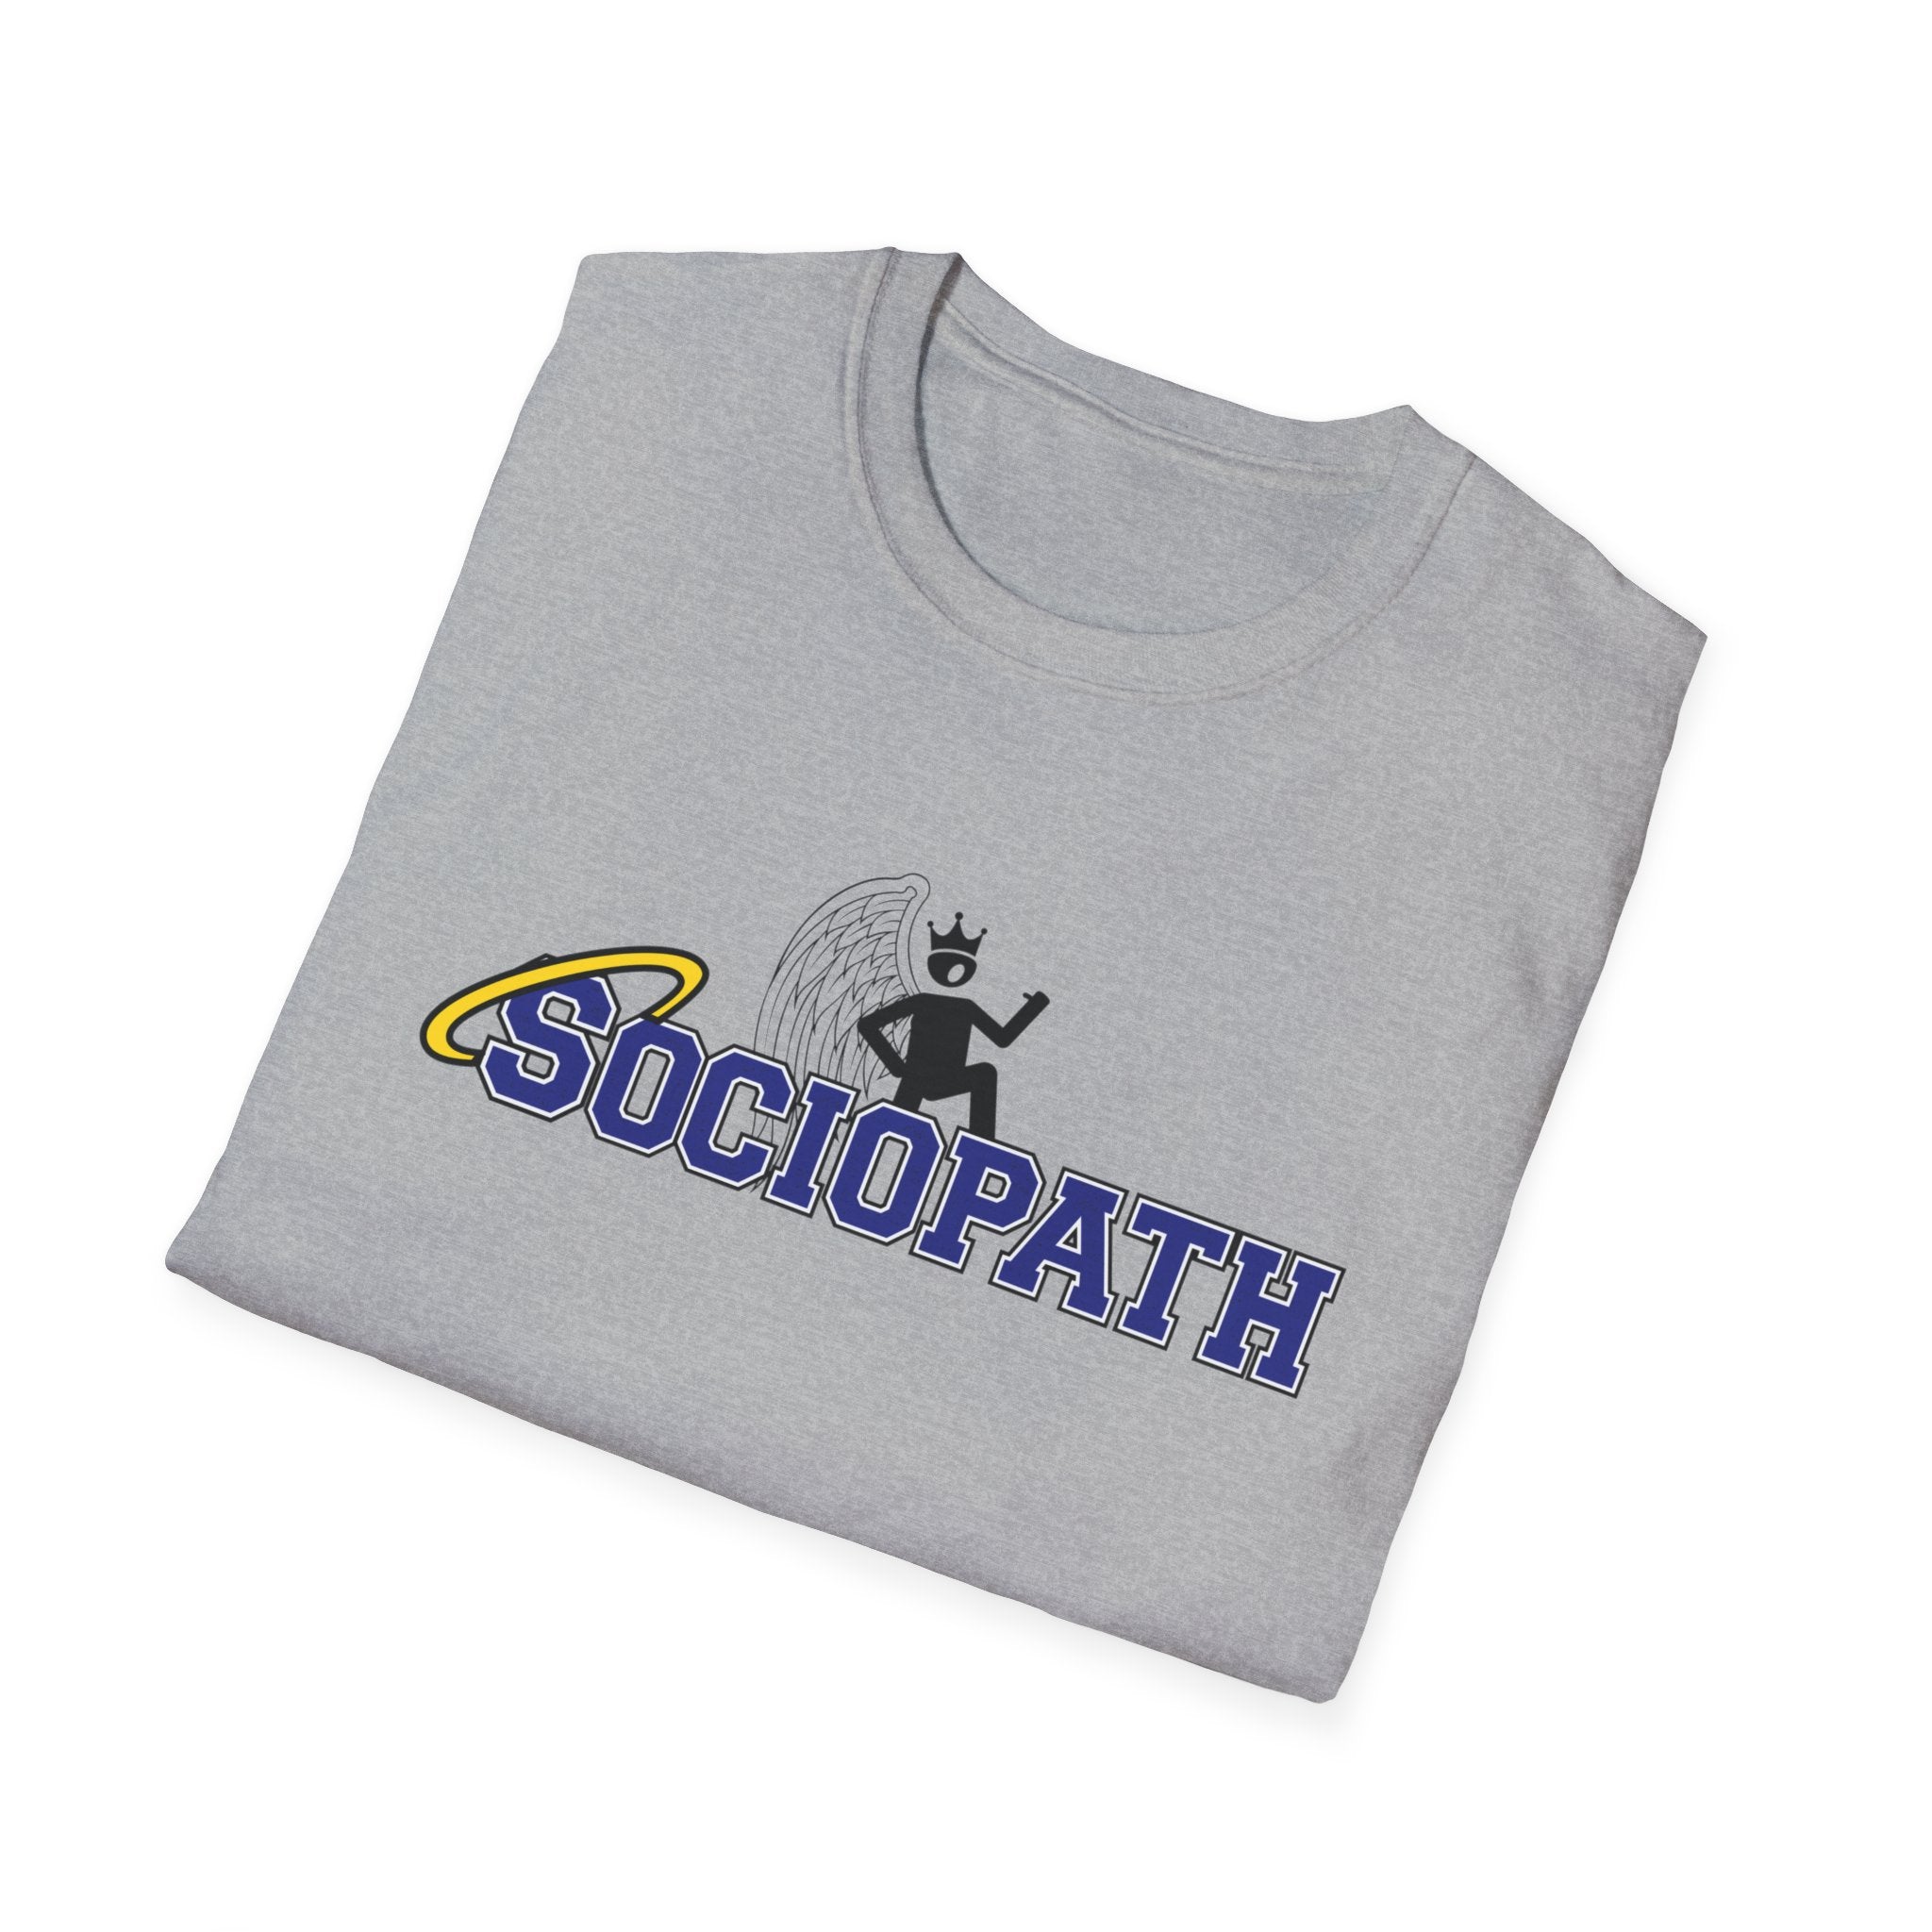 FURDreams “Sociopath” I Unisex Softstyle T-Shirt